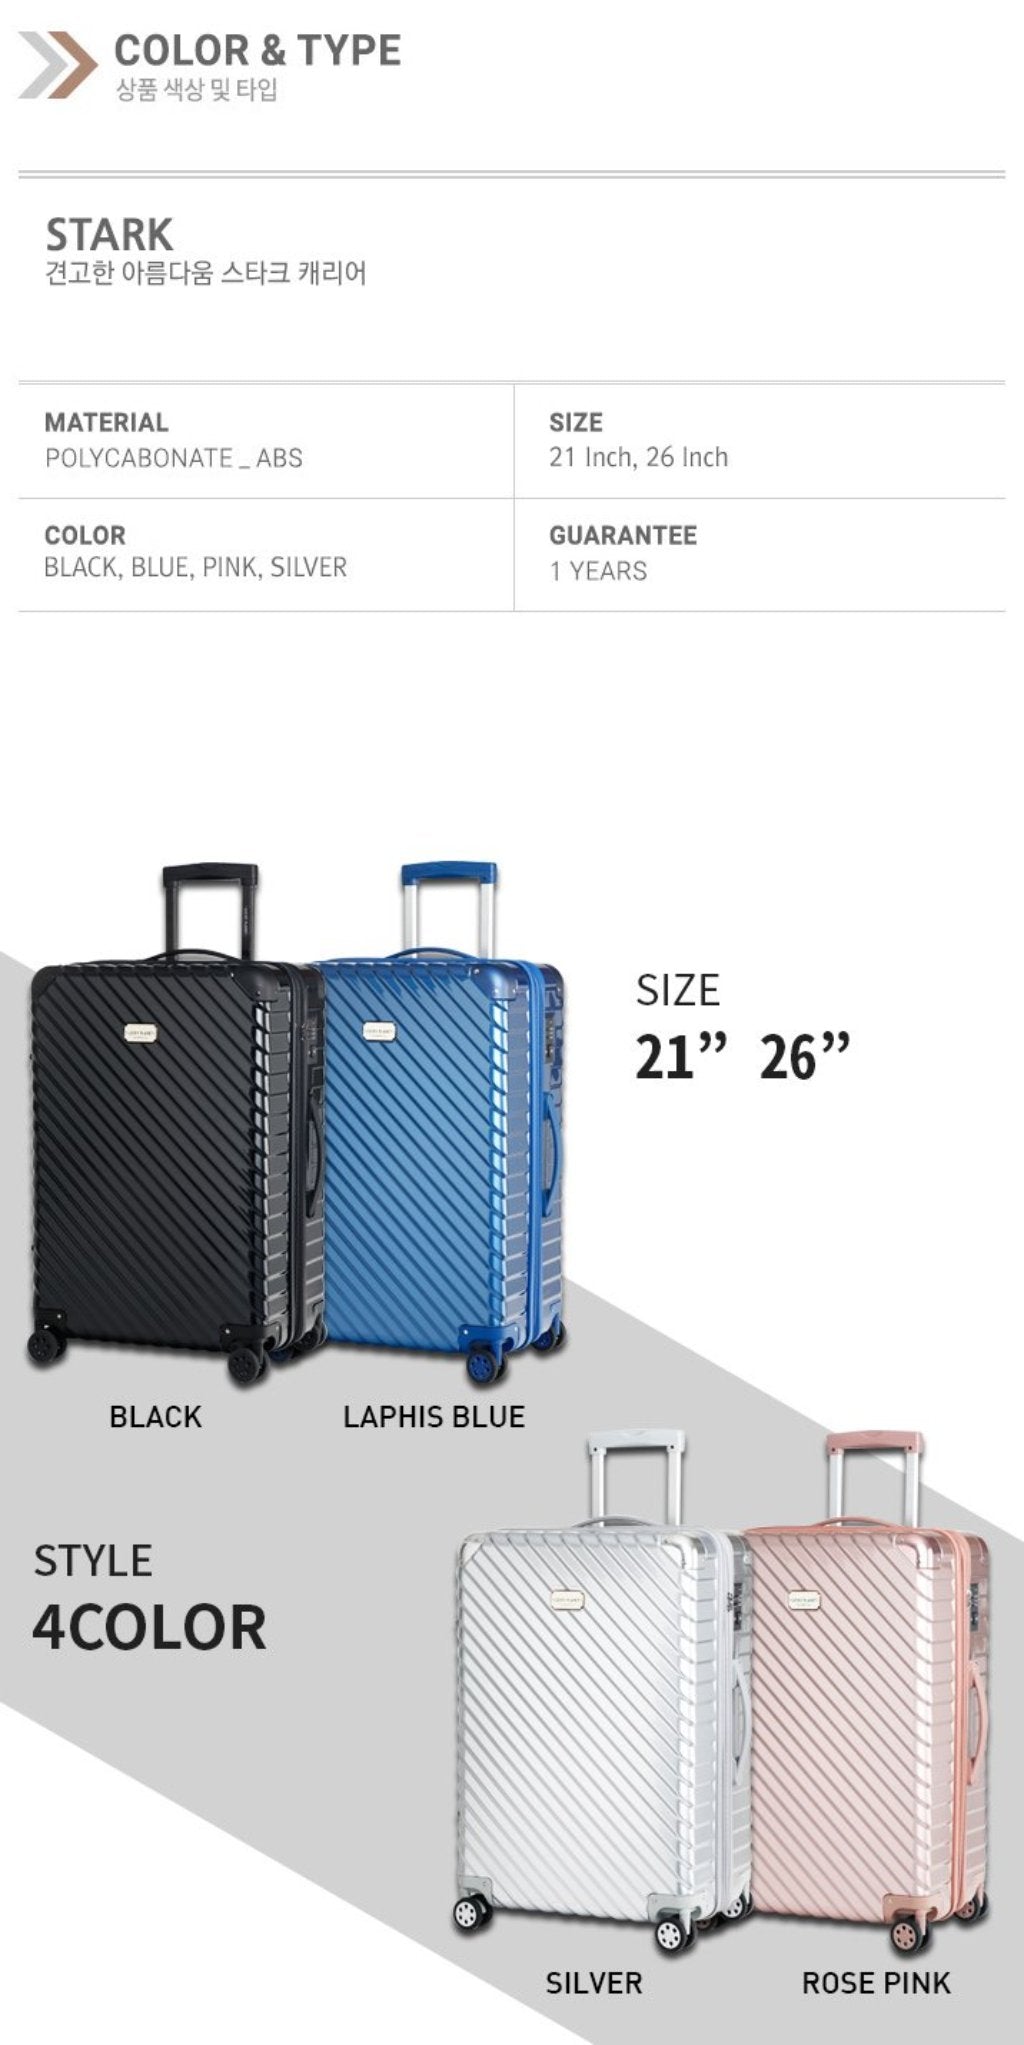 [Lucky Planet] Stark 21-inch Luggage - Luckyplanetusa